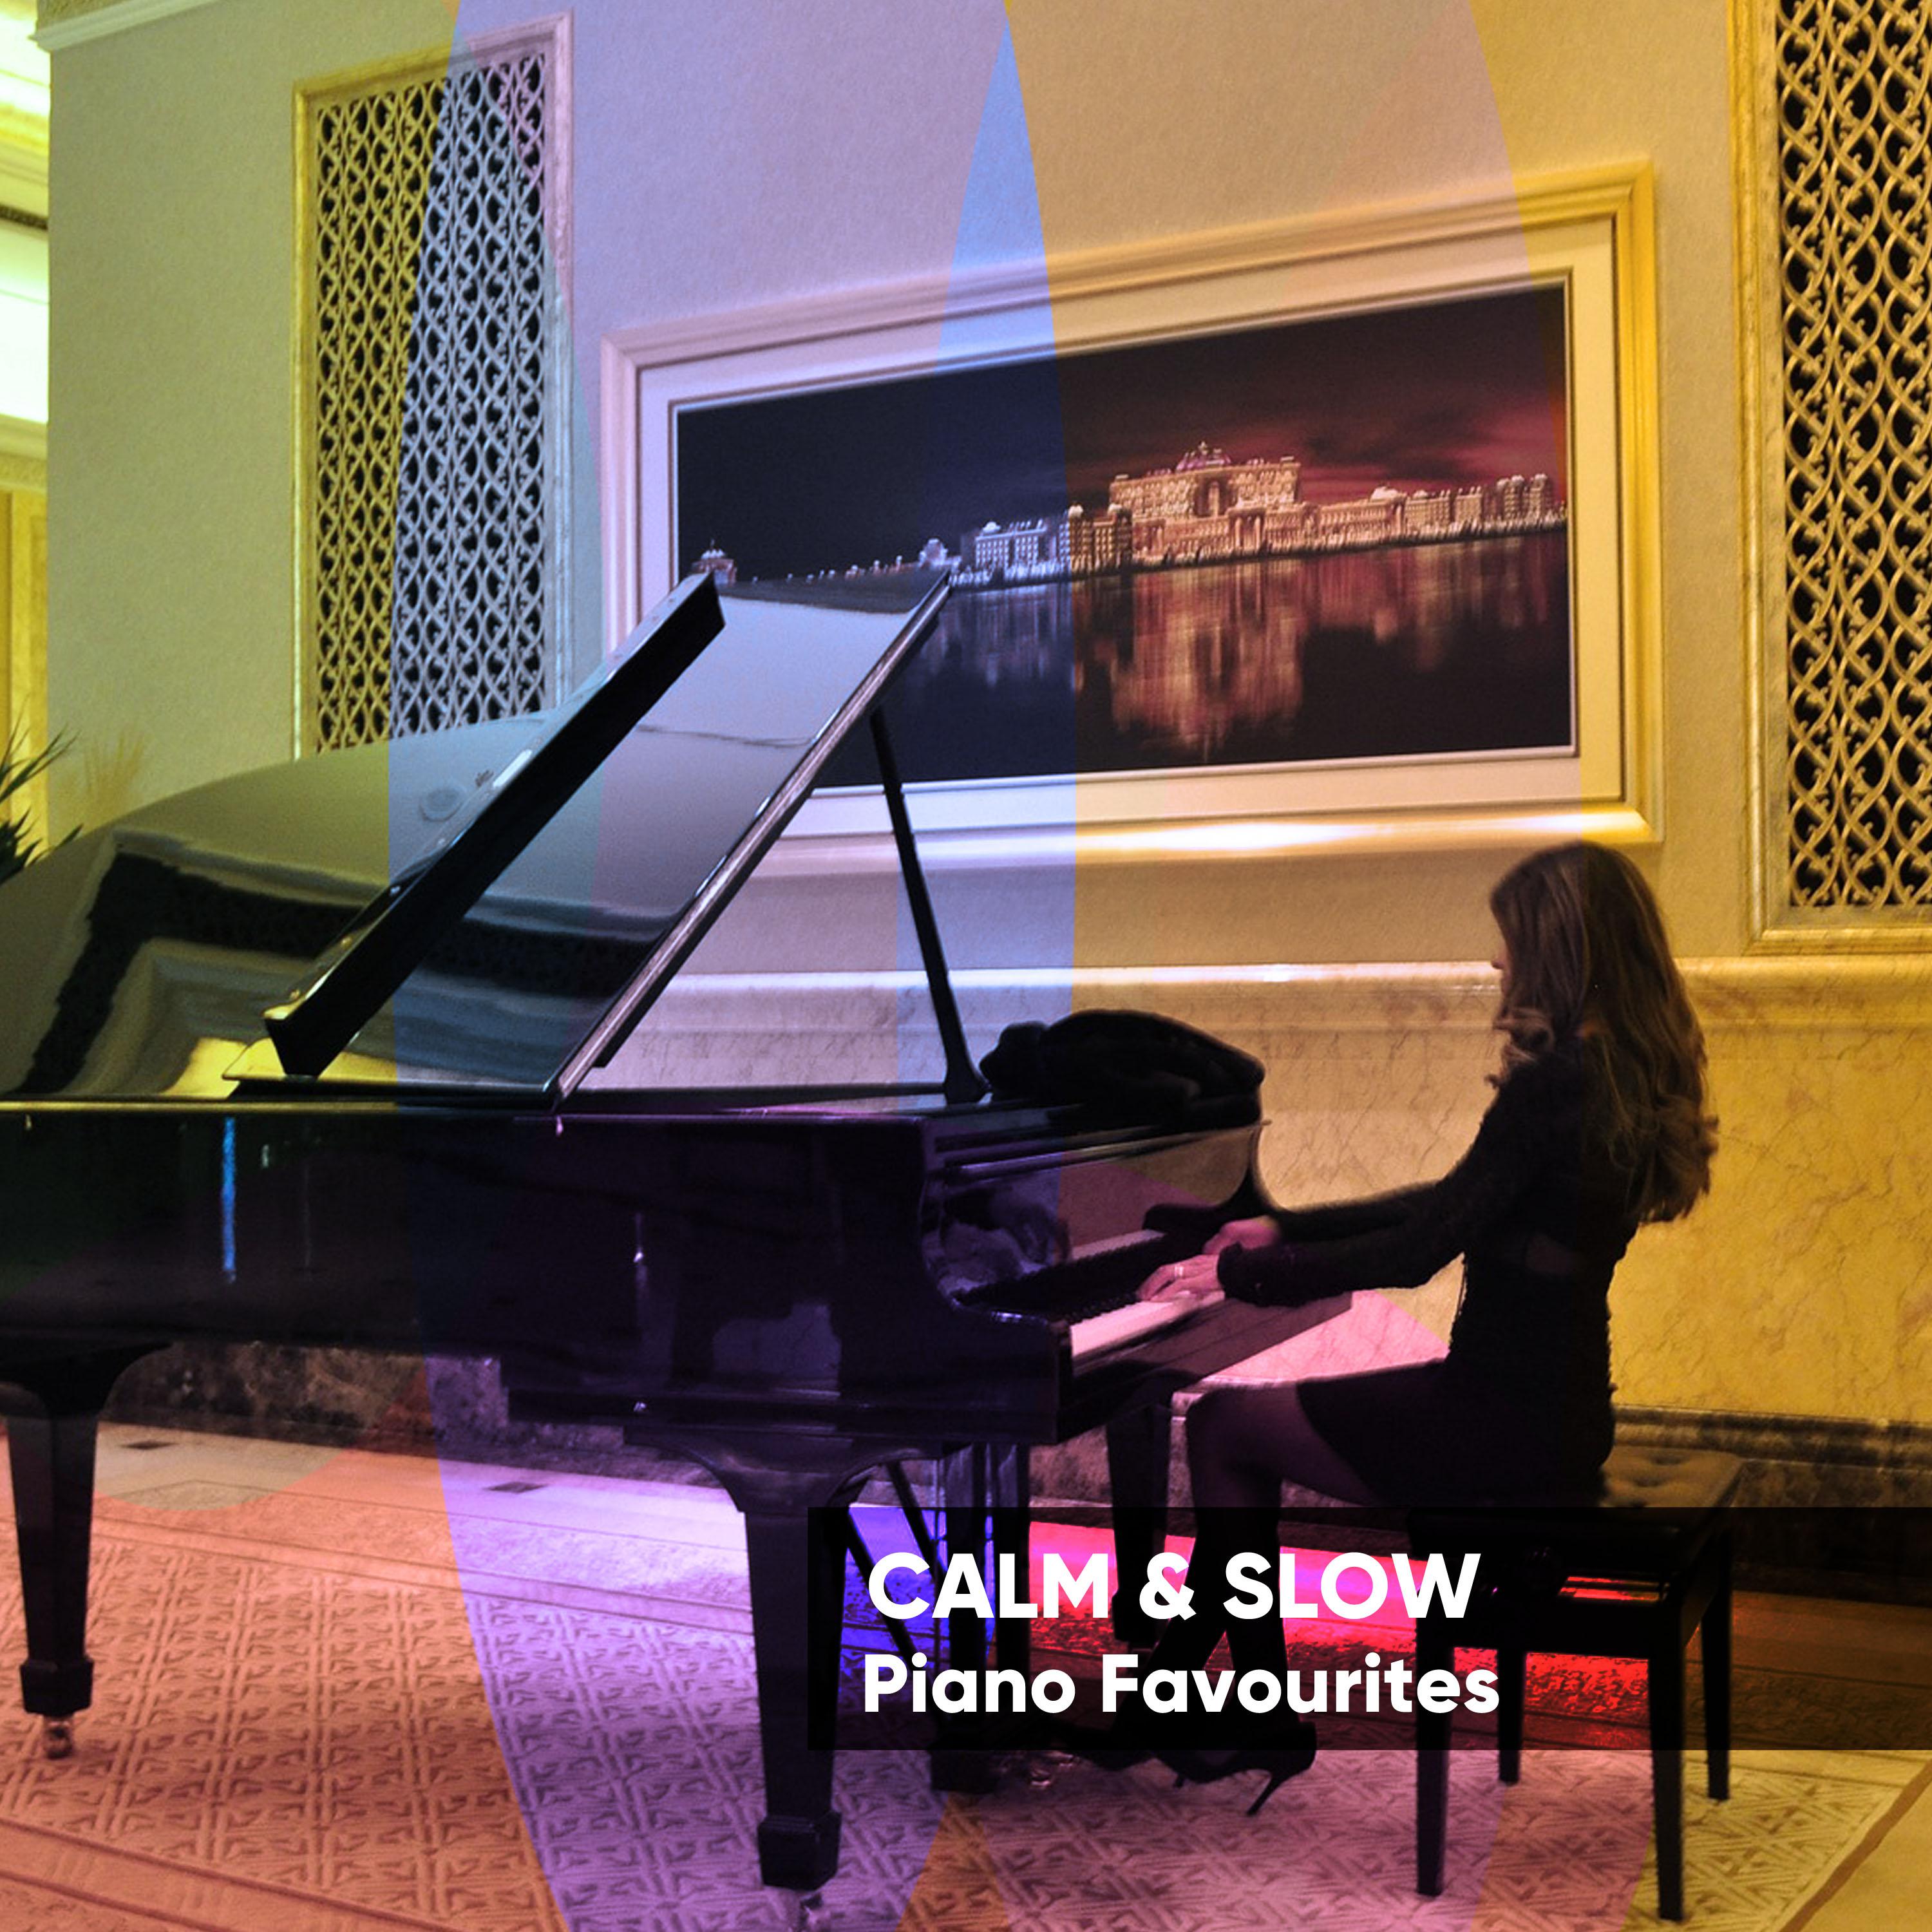 Calm & Slow Piano Favorites